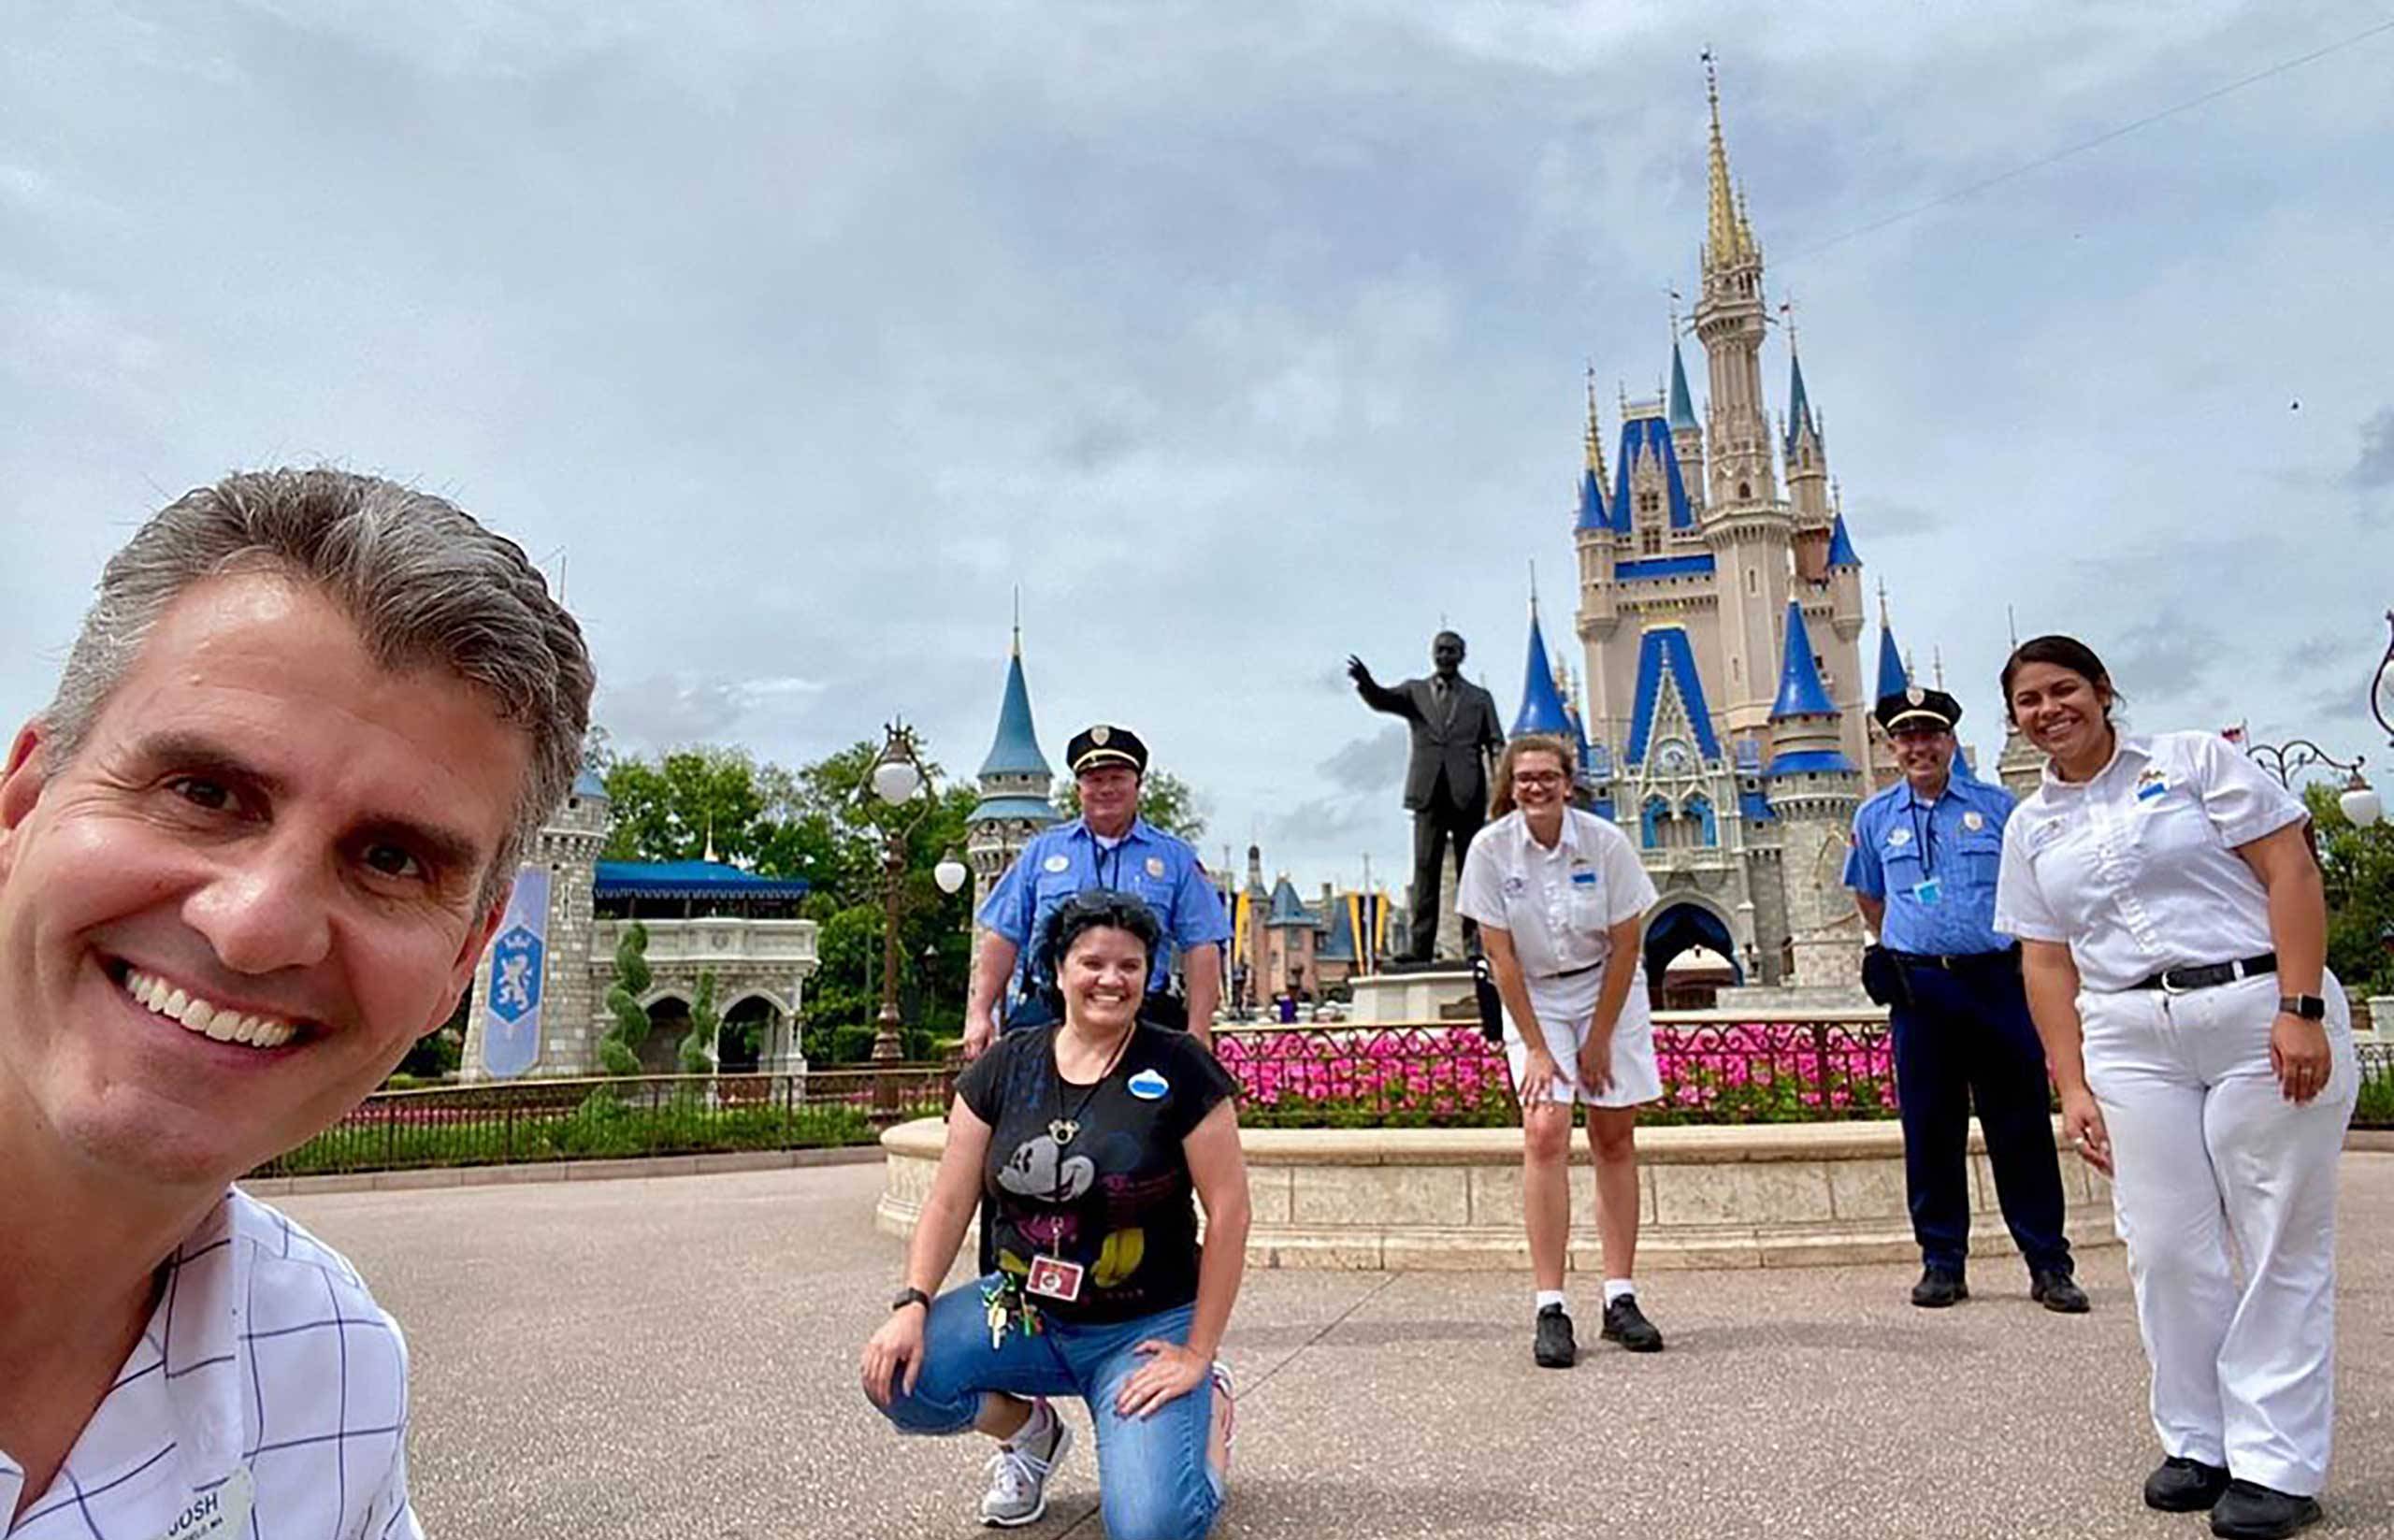 Walt Disney World President Josh D'Amaro posted on Instagram meeting Cast Members still working at the Magic Kingdom